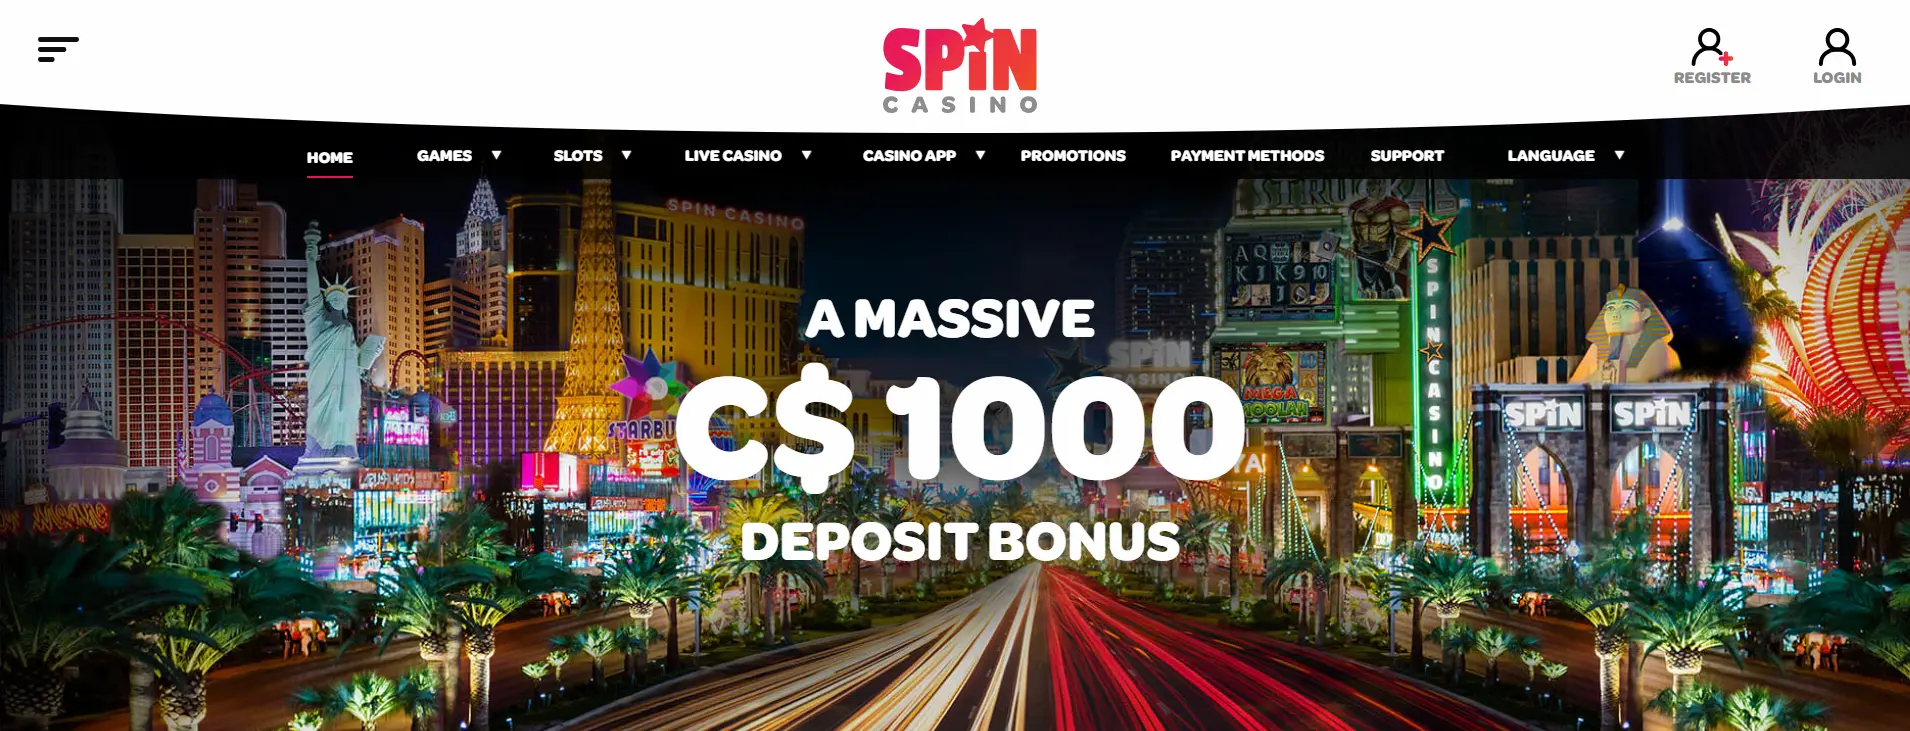 Spin Online Casino - Screenshot From Official Website